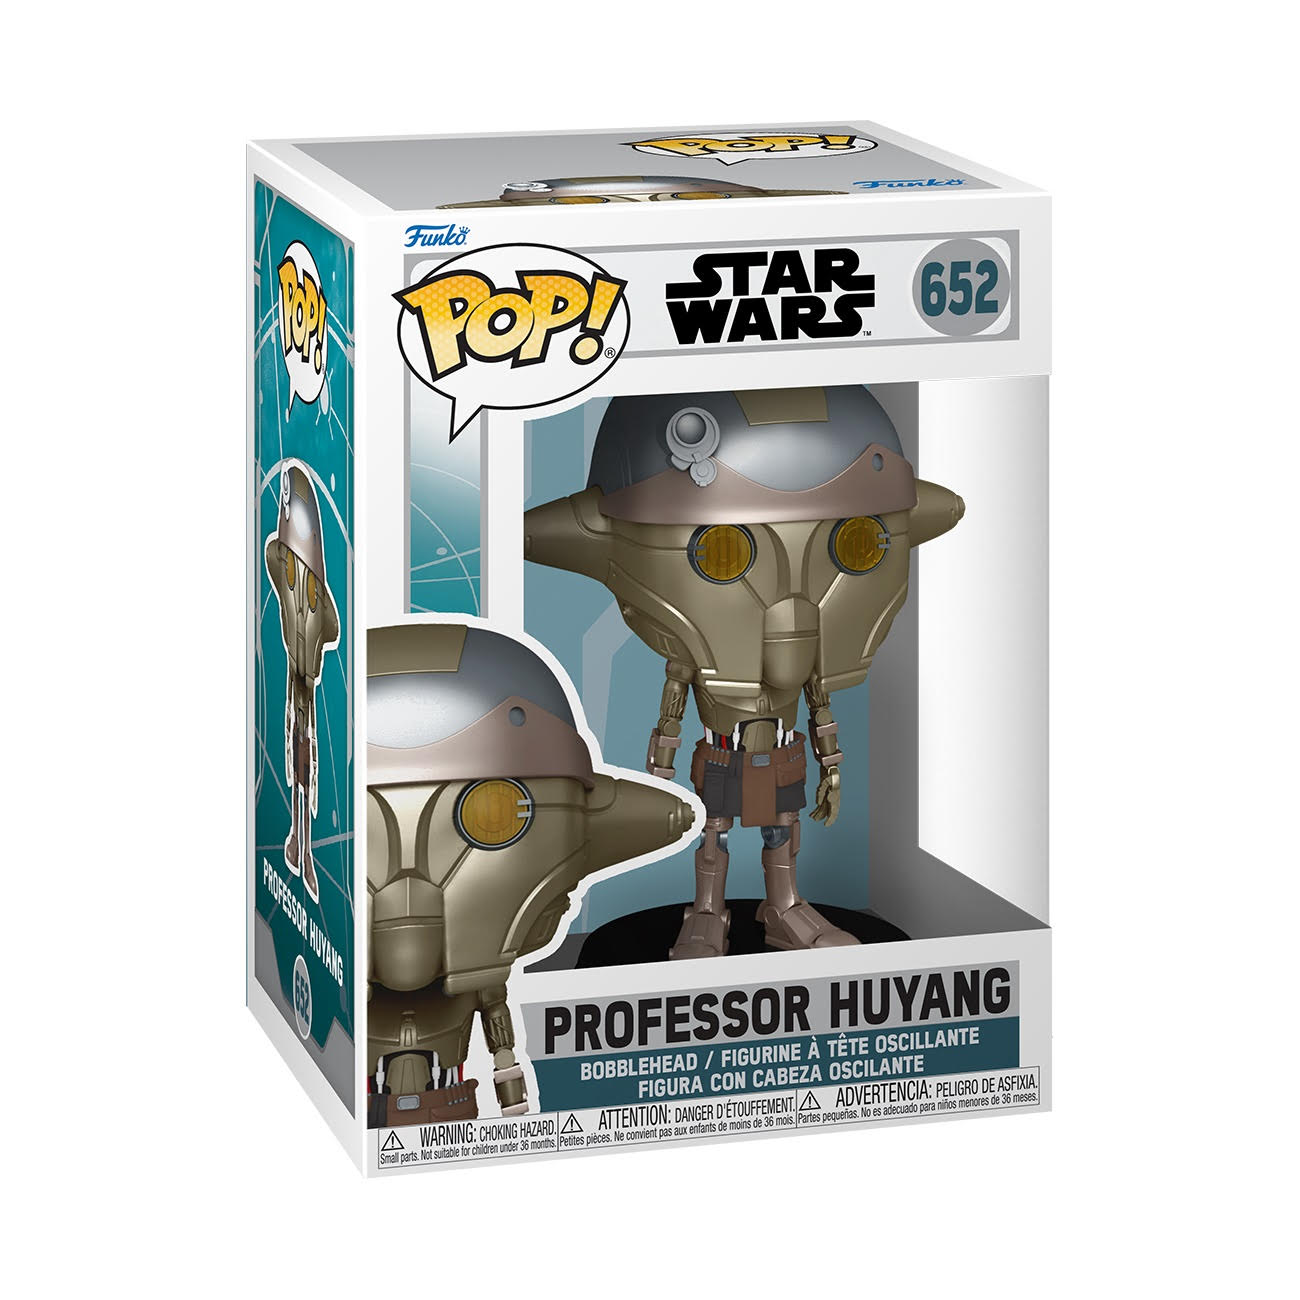 Star Wars: Ahsoka - Professor Huyang 652 Funko Pop! Vinyl Figure